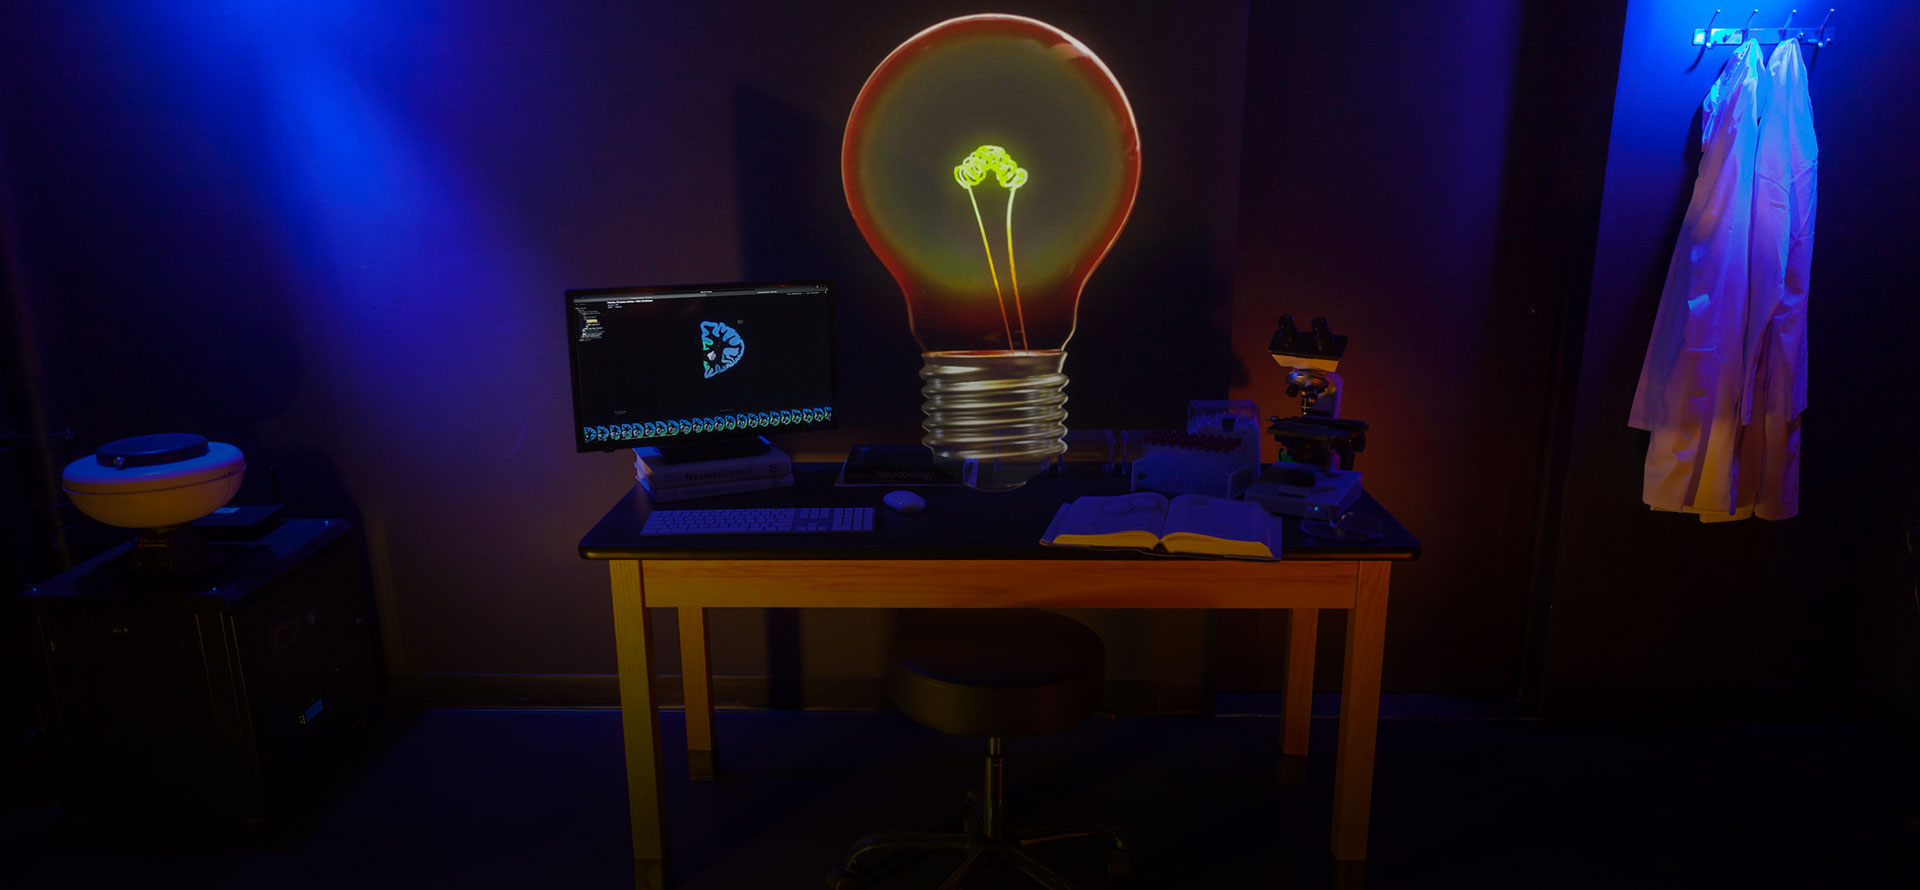 Desk with image of lightbulb on it